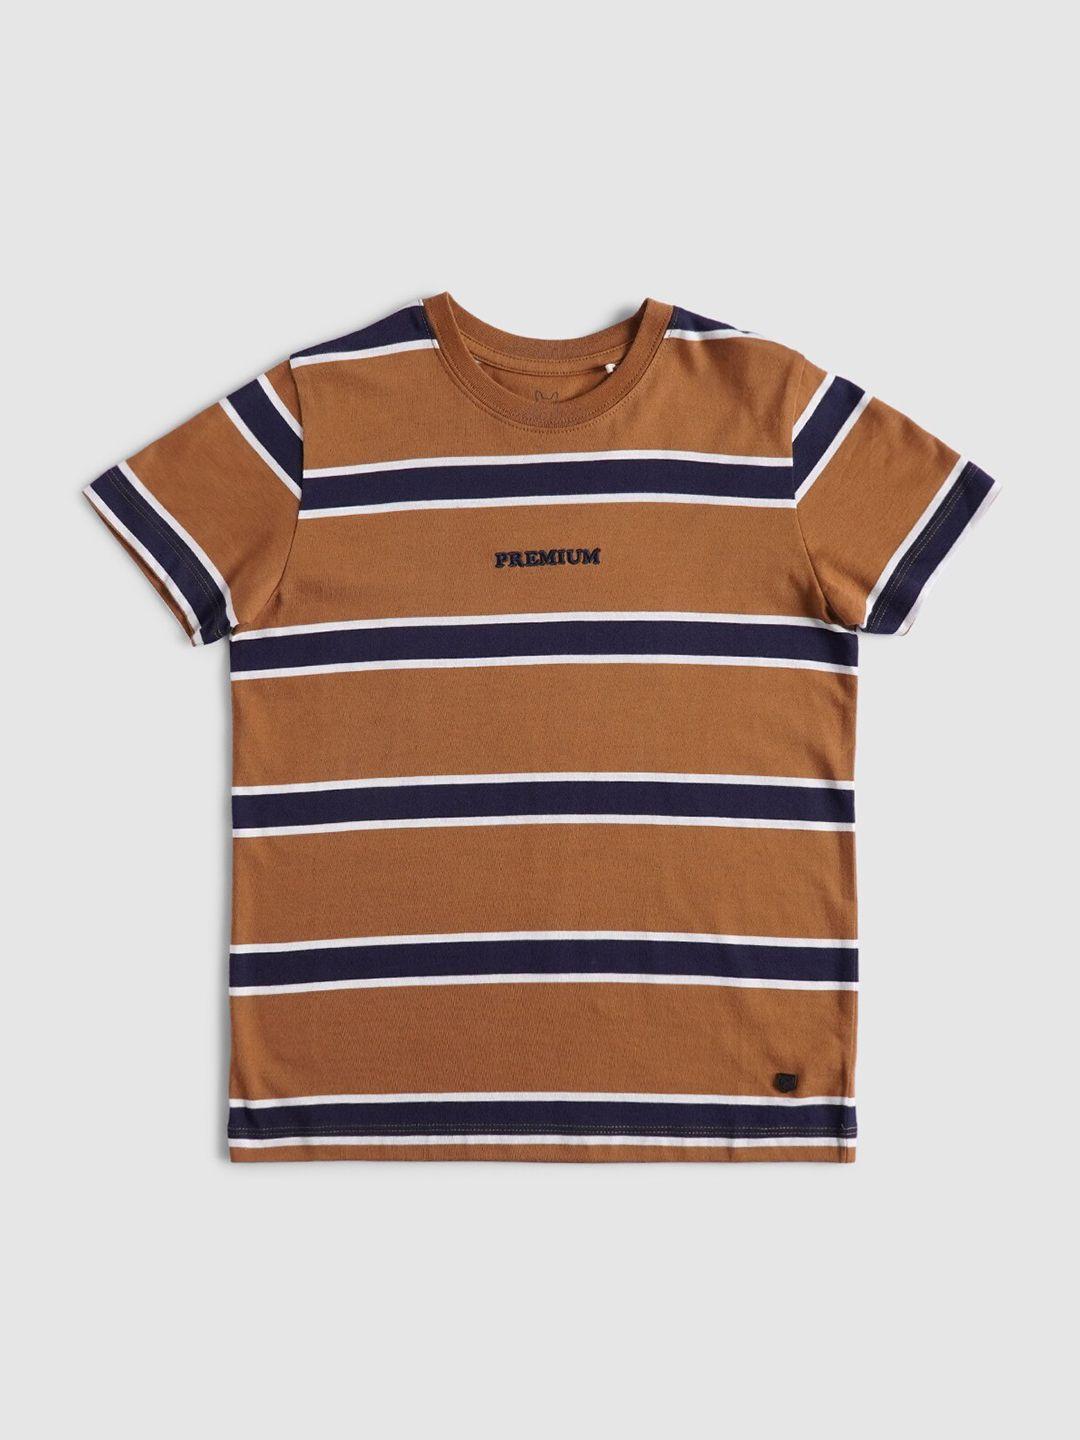 jack & jones boys brown & navy blue striped t-shirt